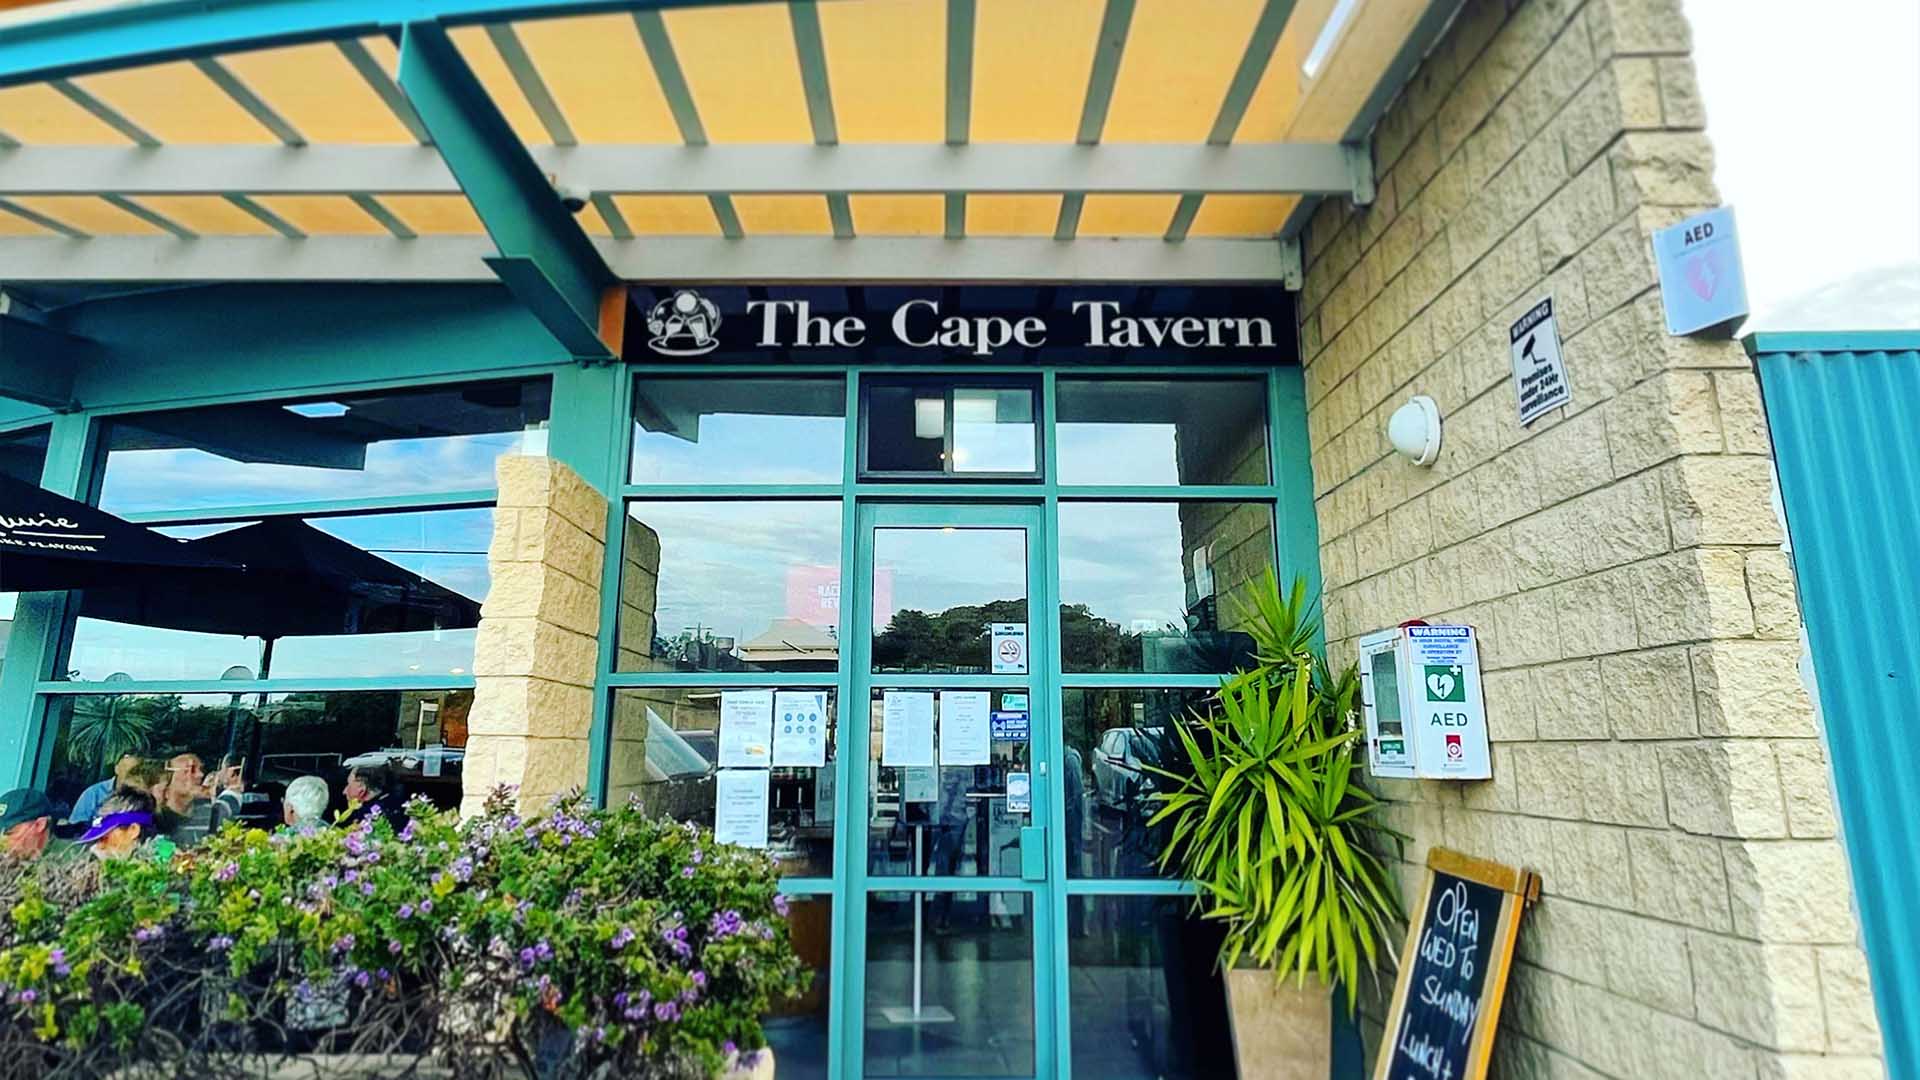 The Cape Tavern